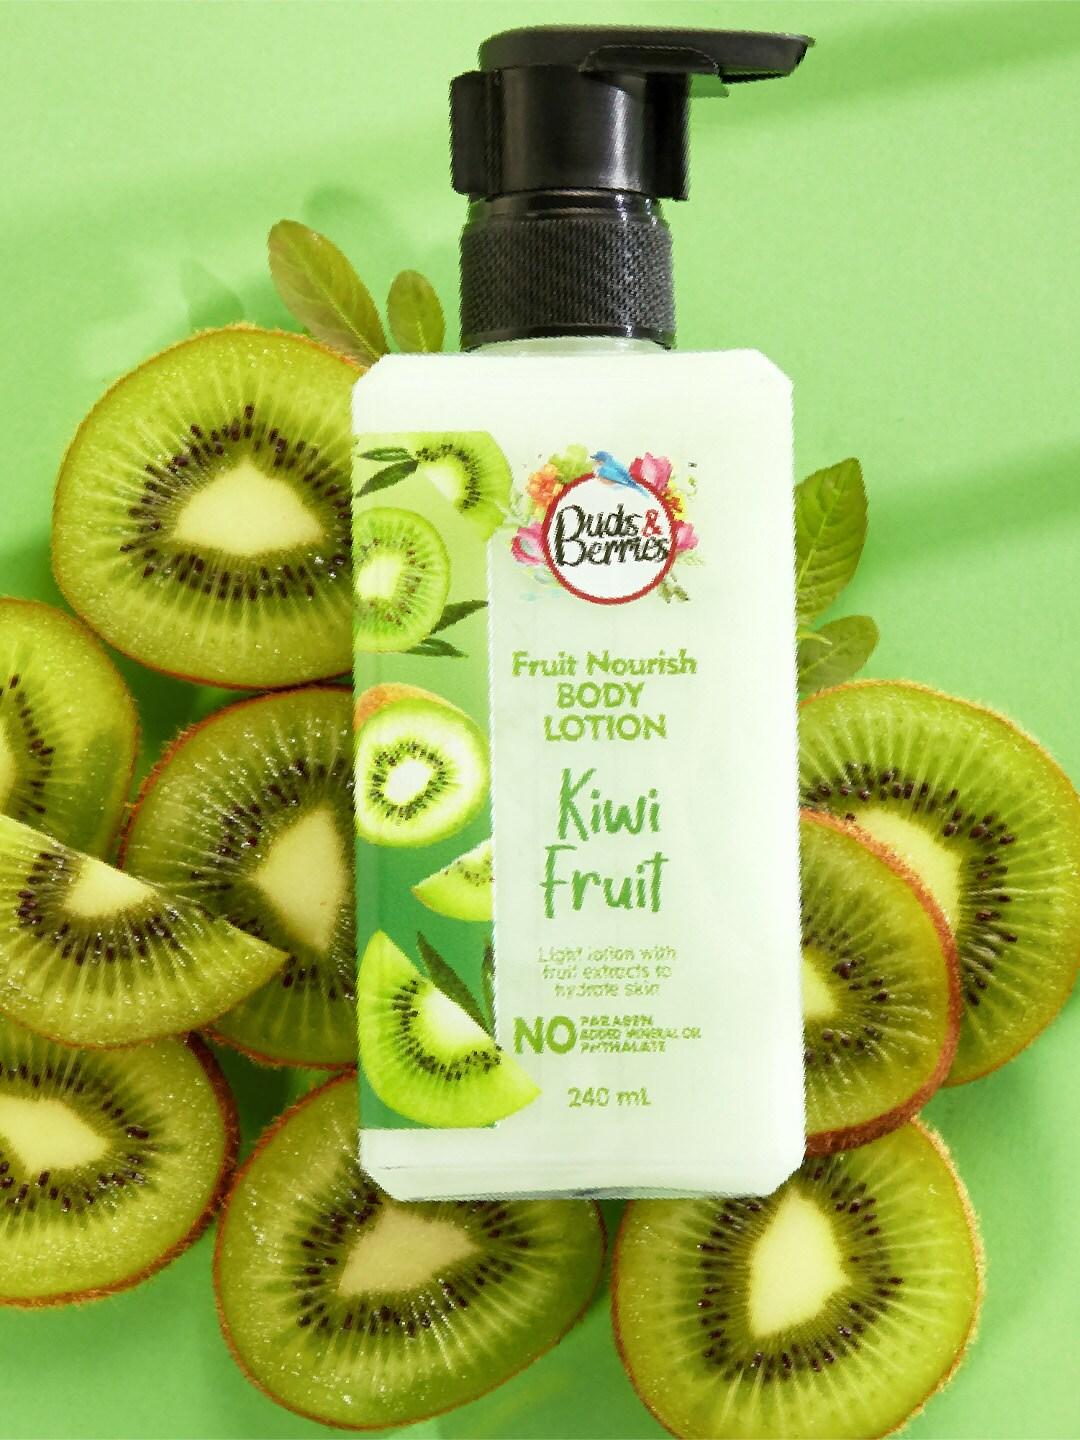 Buds & Berries Fruit Nourish Kiwi Fruit Gel Body Lotion for Hydrated Skin - 240 ml